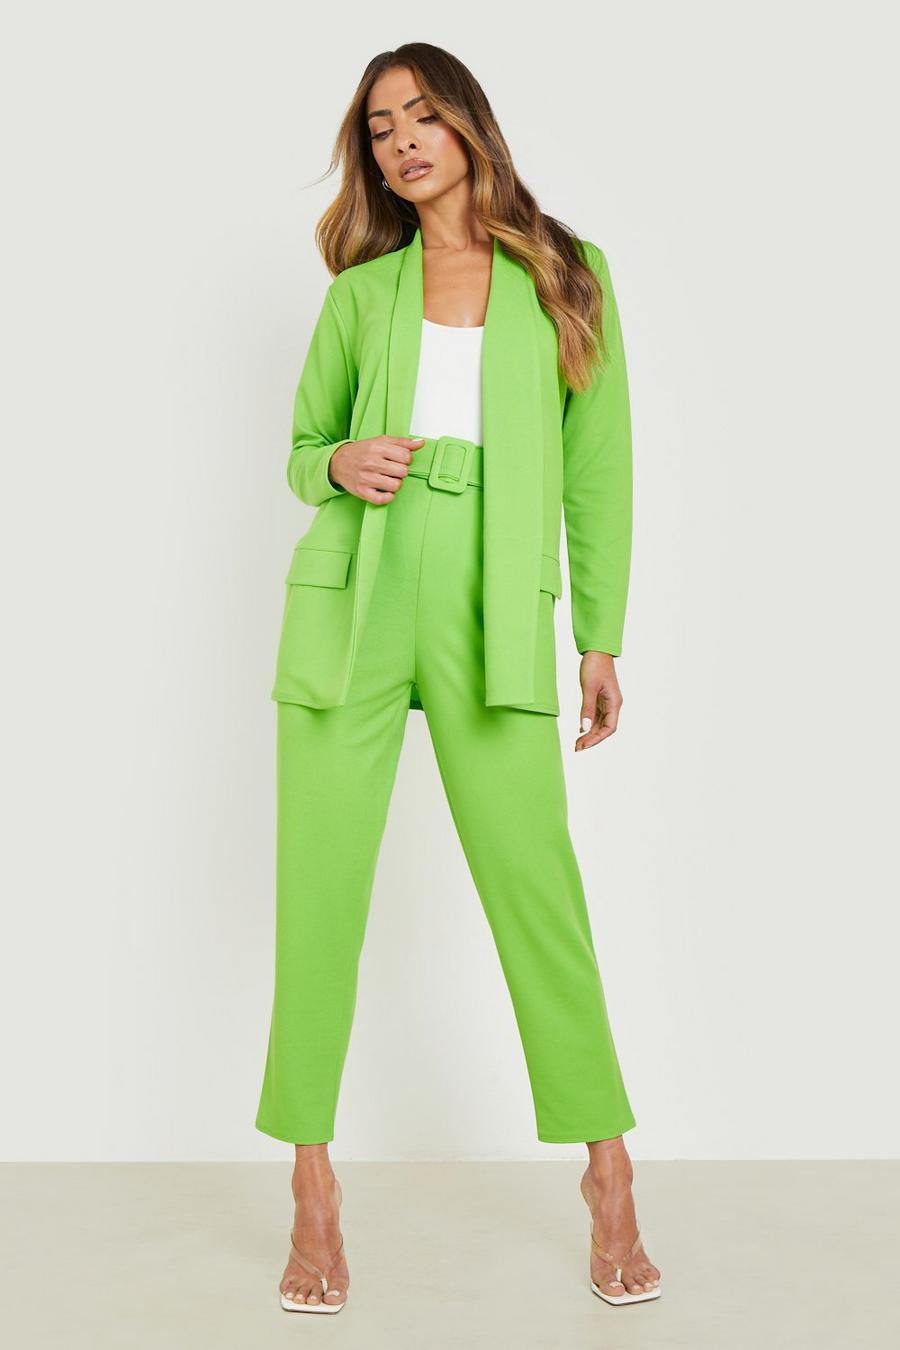 Apple green gerde Blazer & Self Fabric Trouser Suit Set